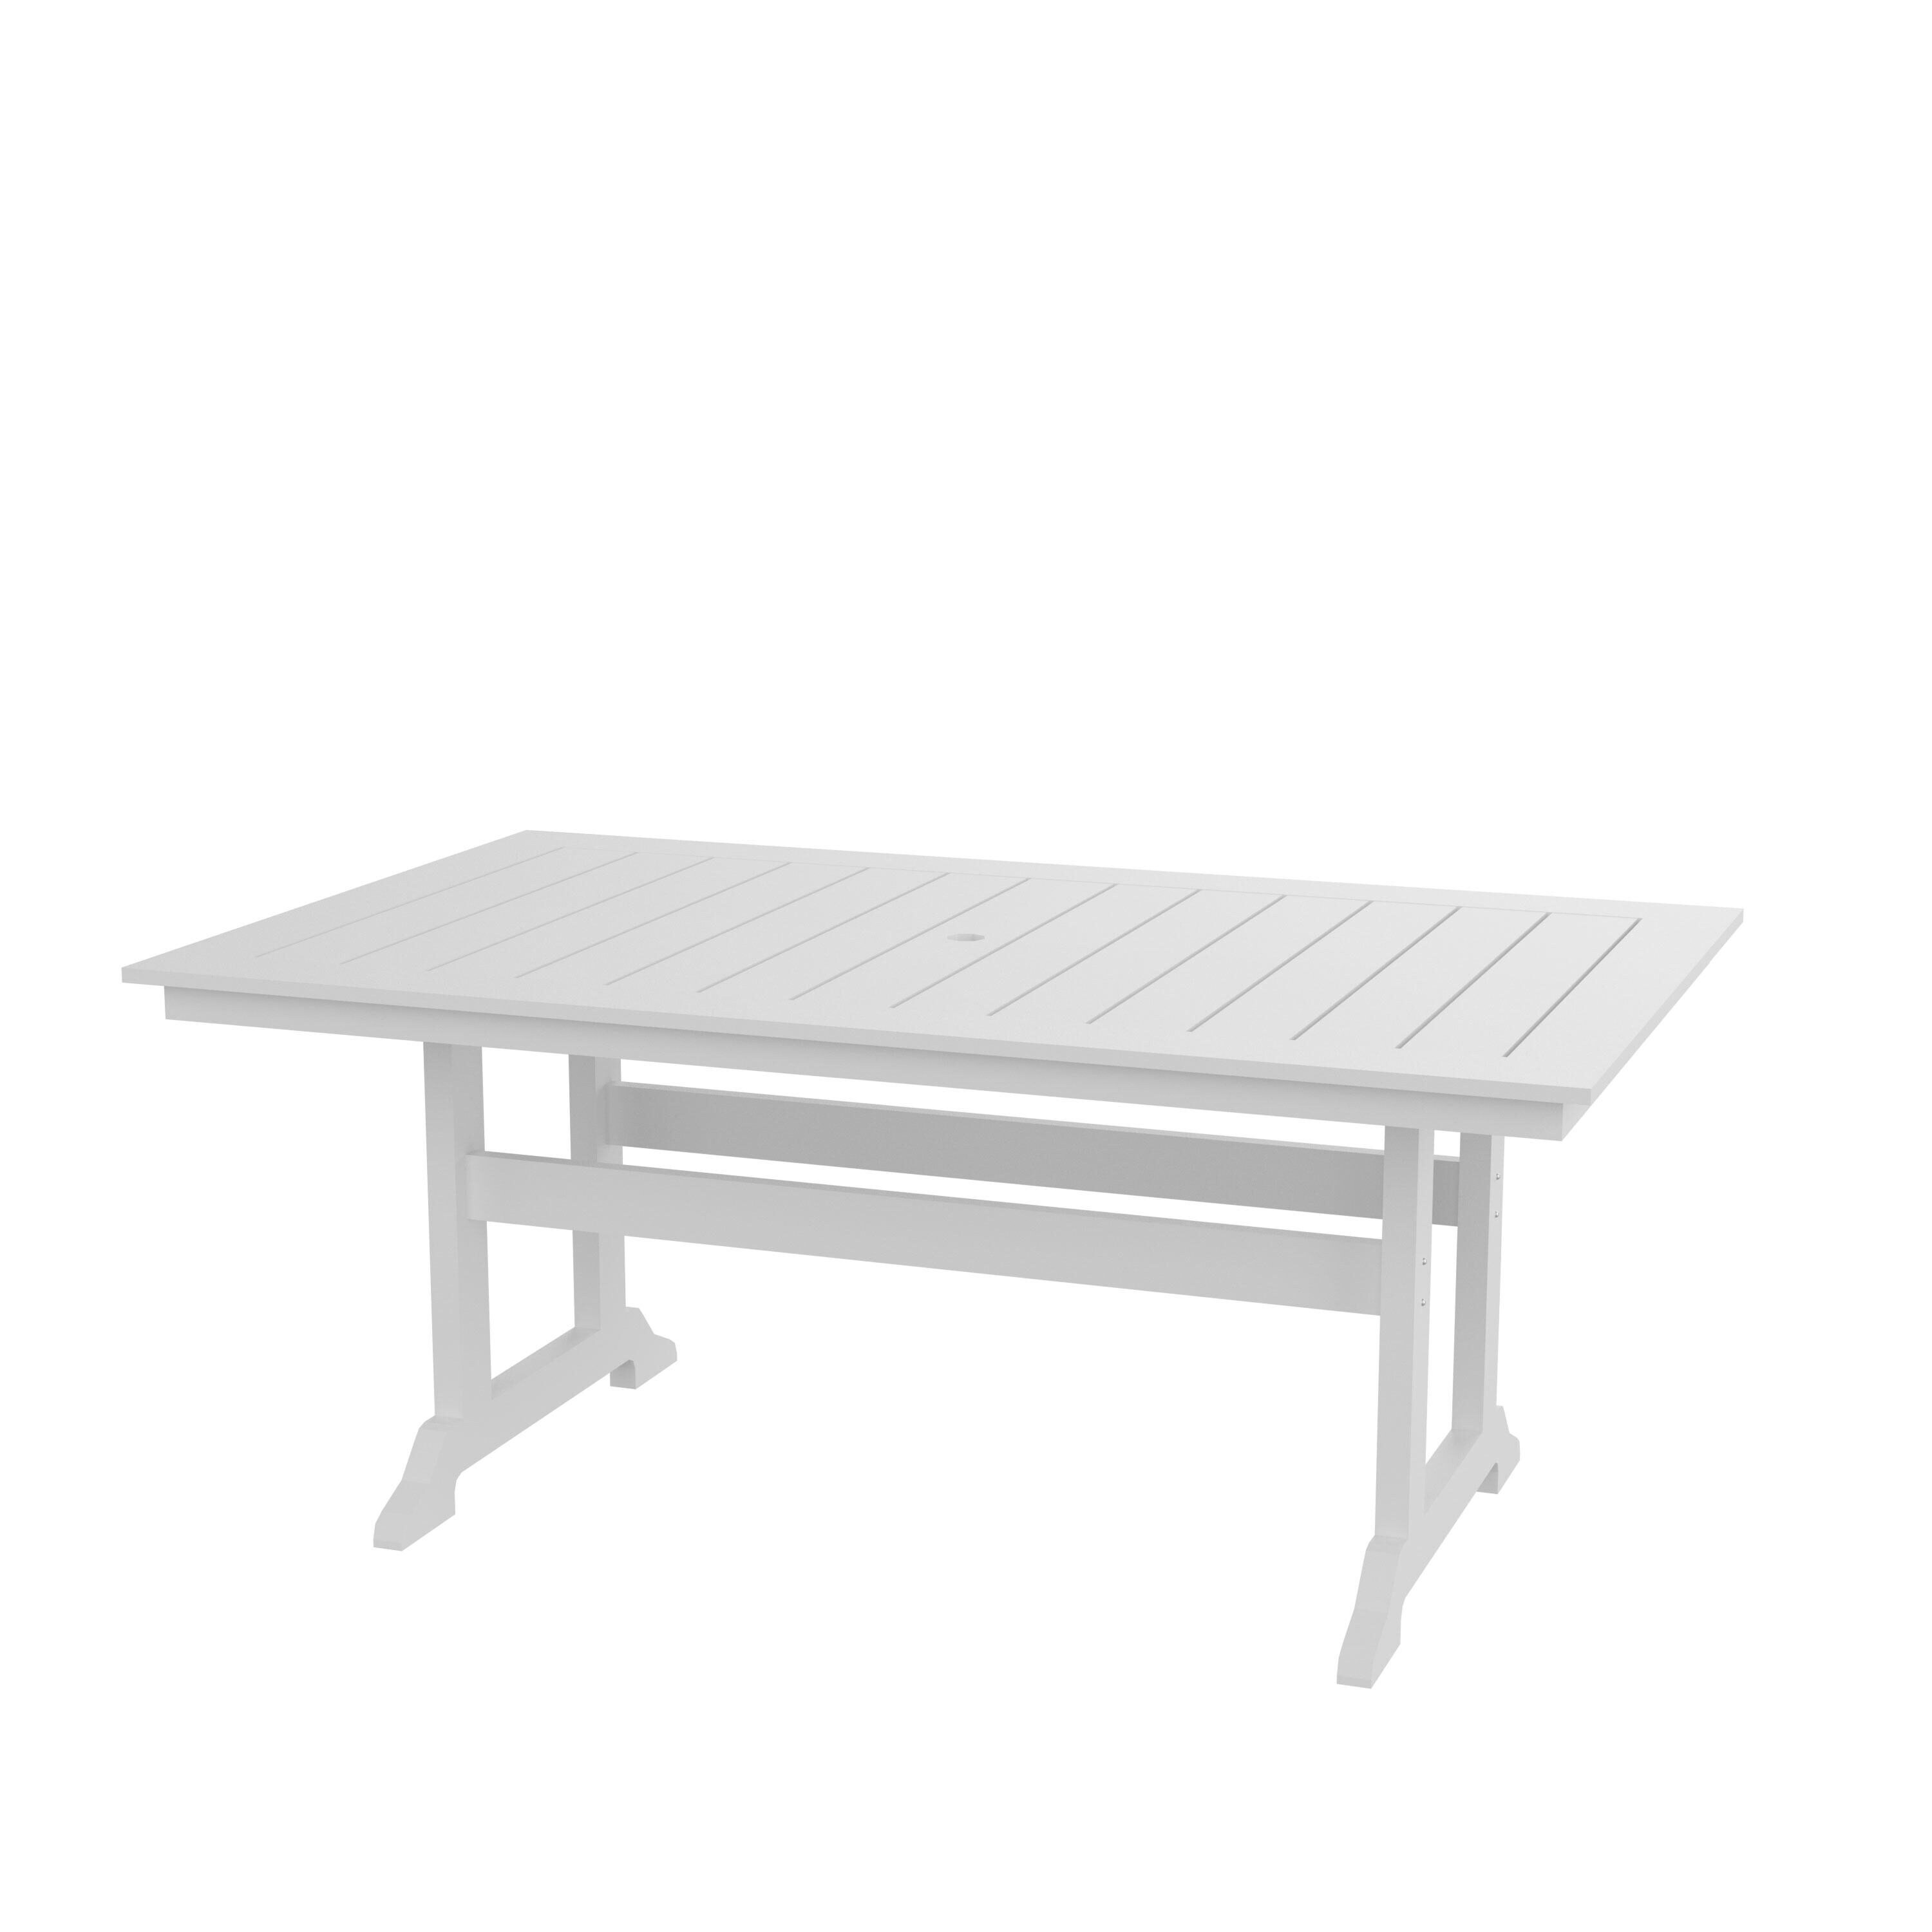 Table rectangle 240 x 90 cm - Breizh'Loc reception